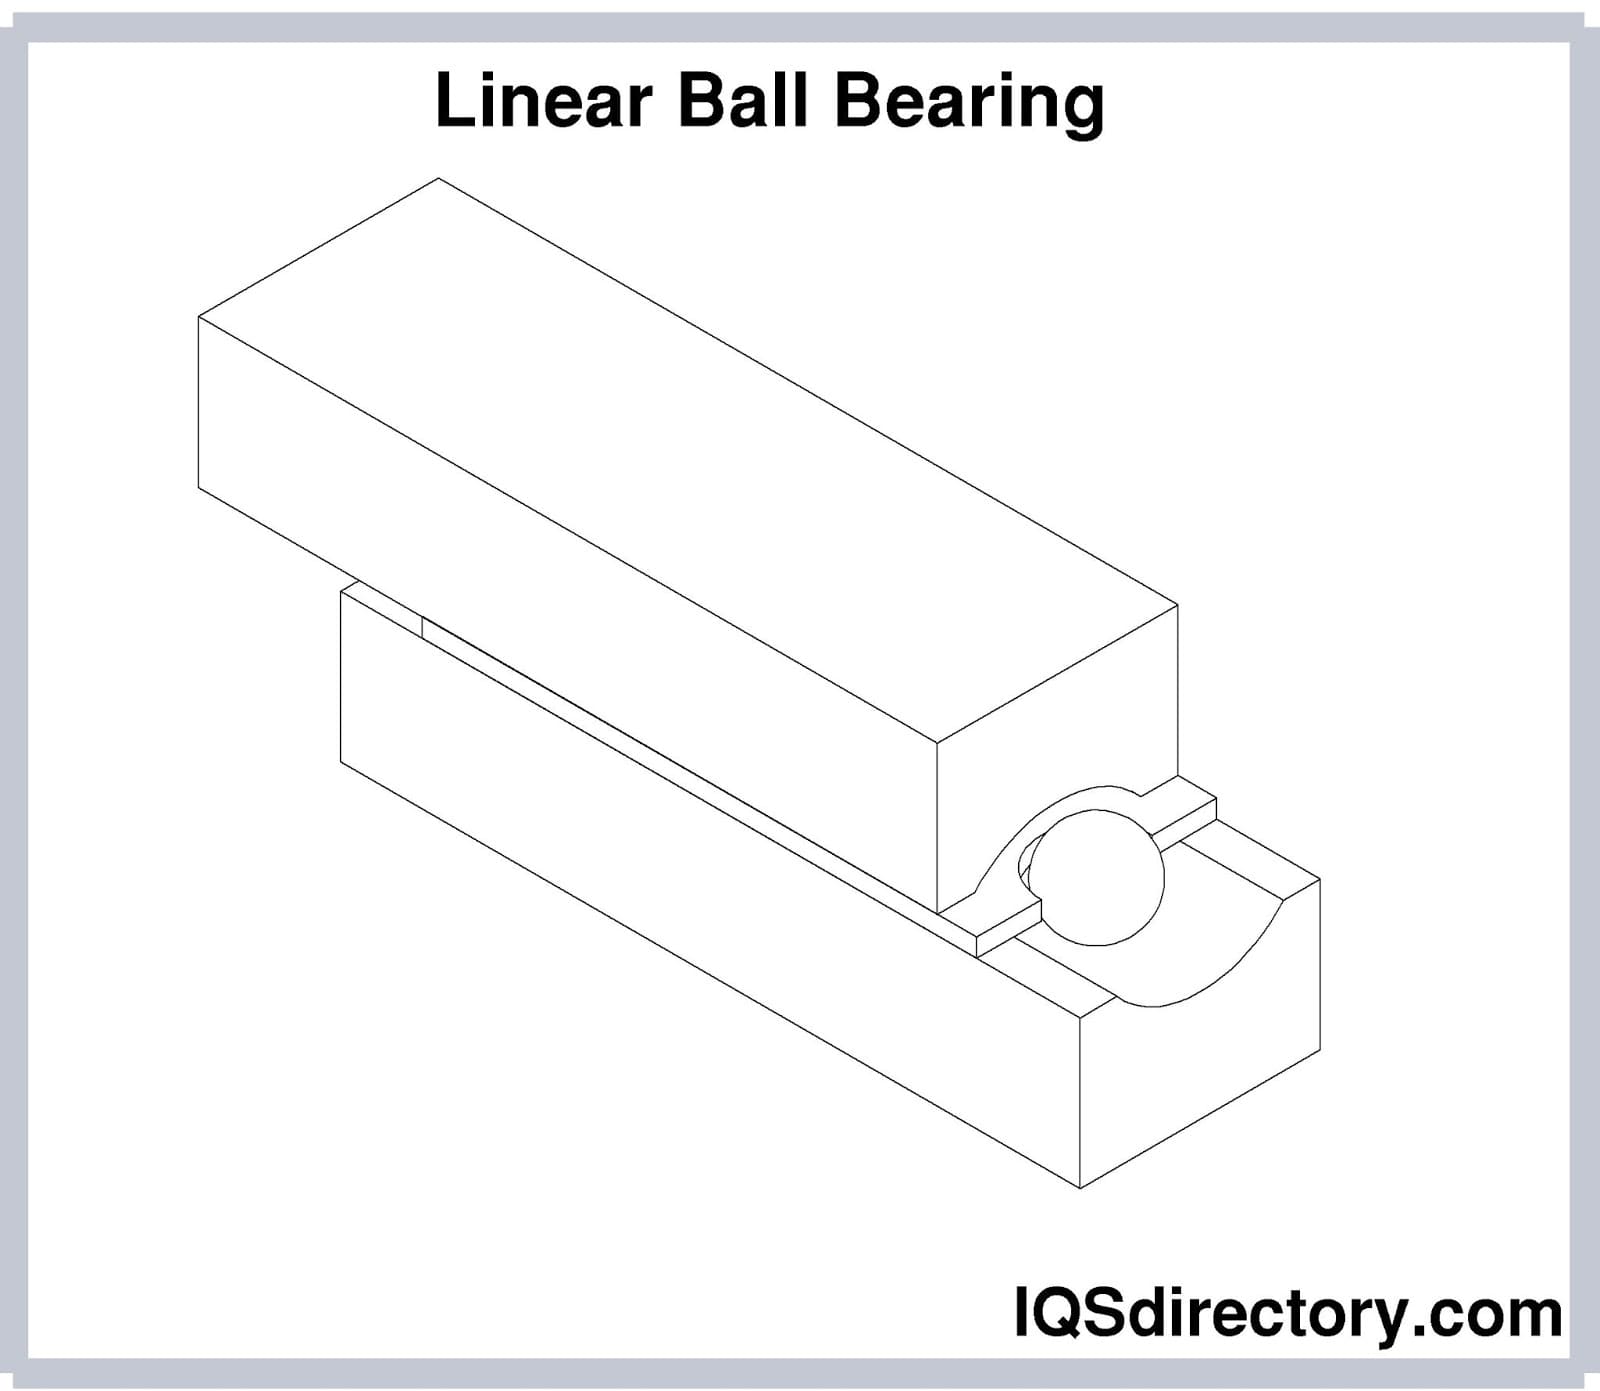 Non-Recirculating Linear Ball Bearings